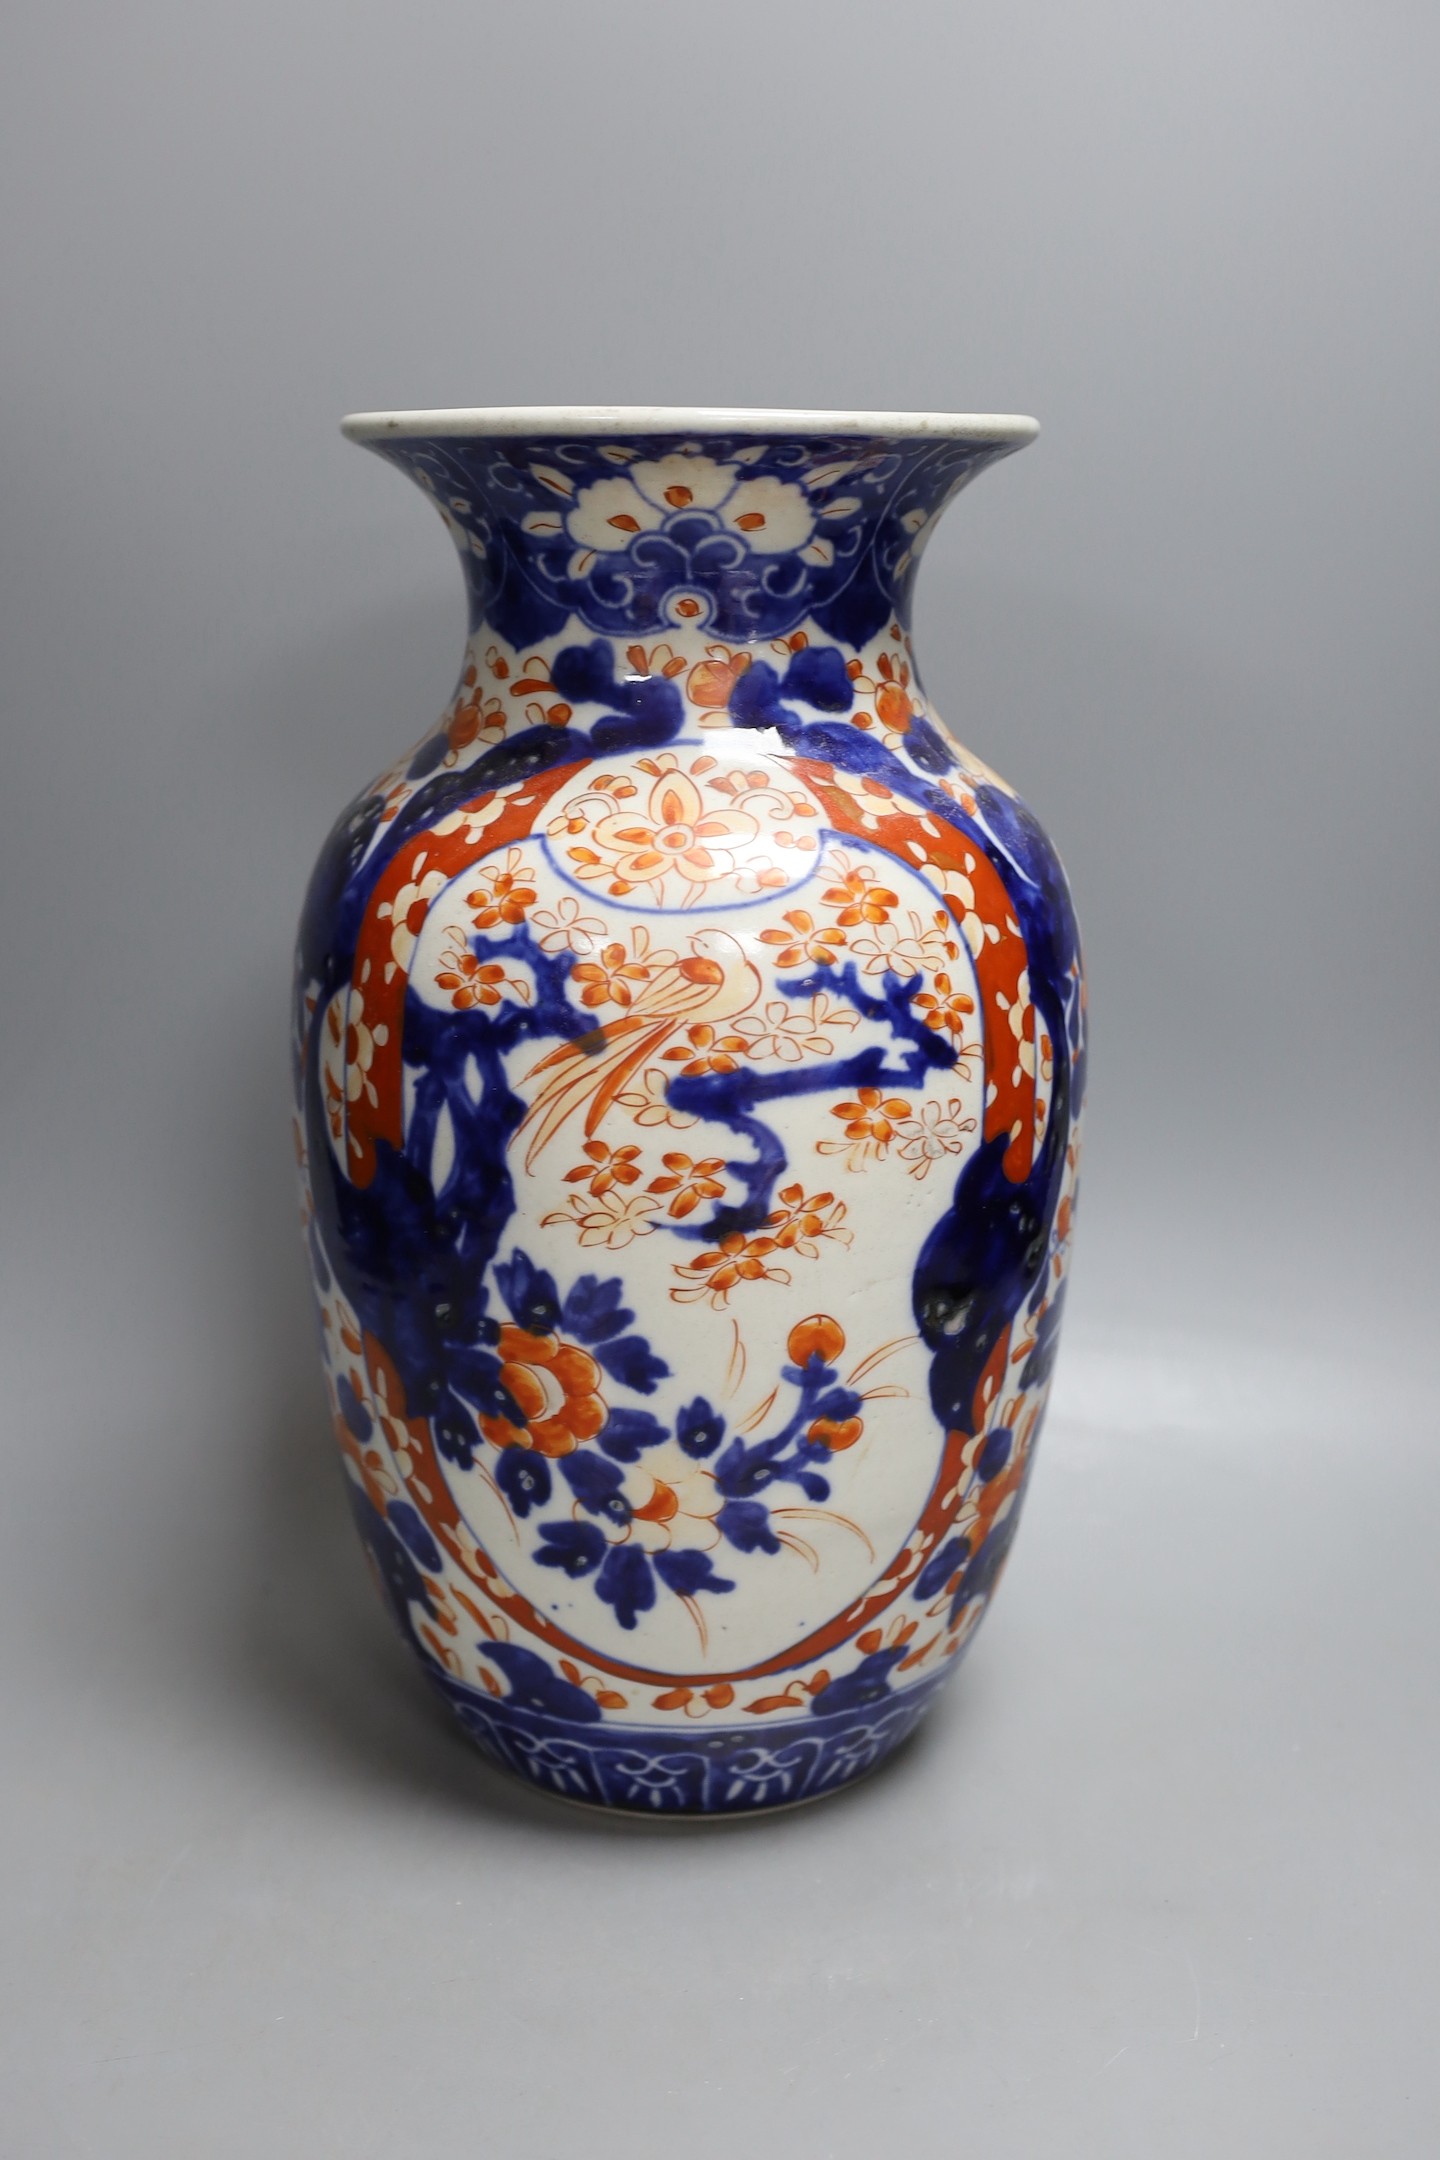 Four Japanese Imari dishes and a vase, vase 31 cms high. (5)